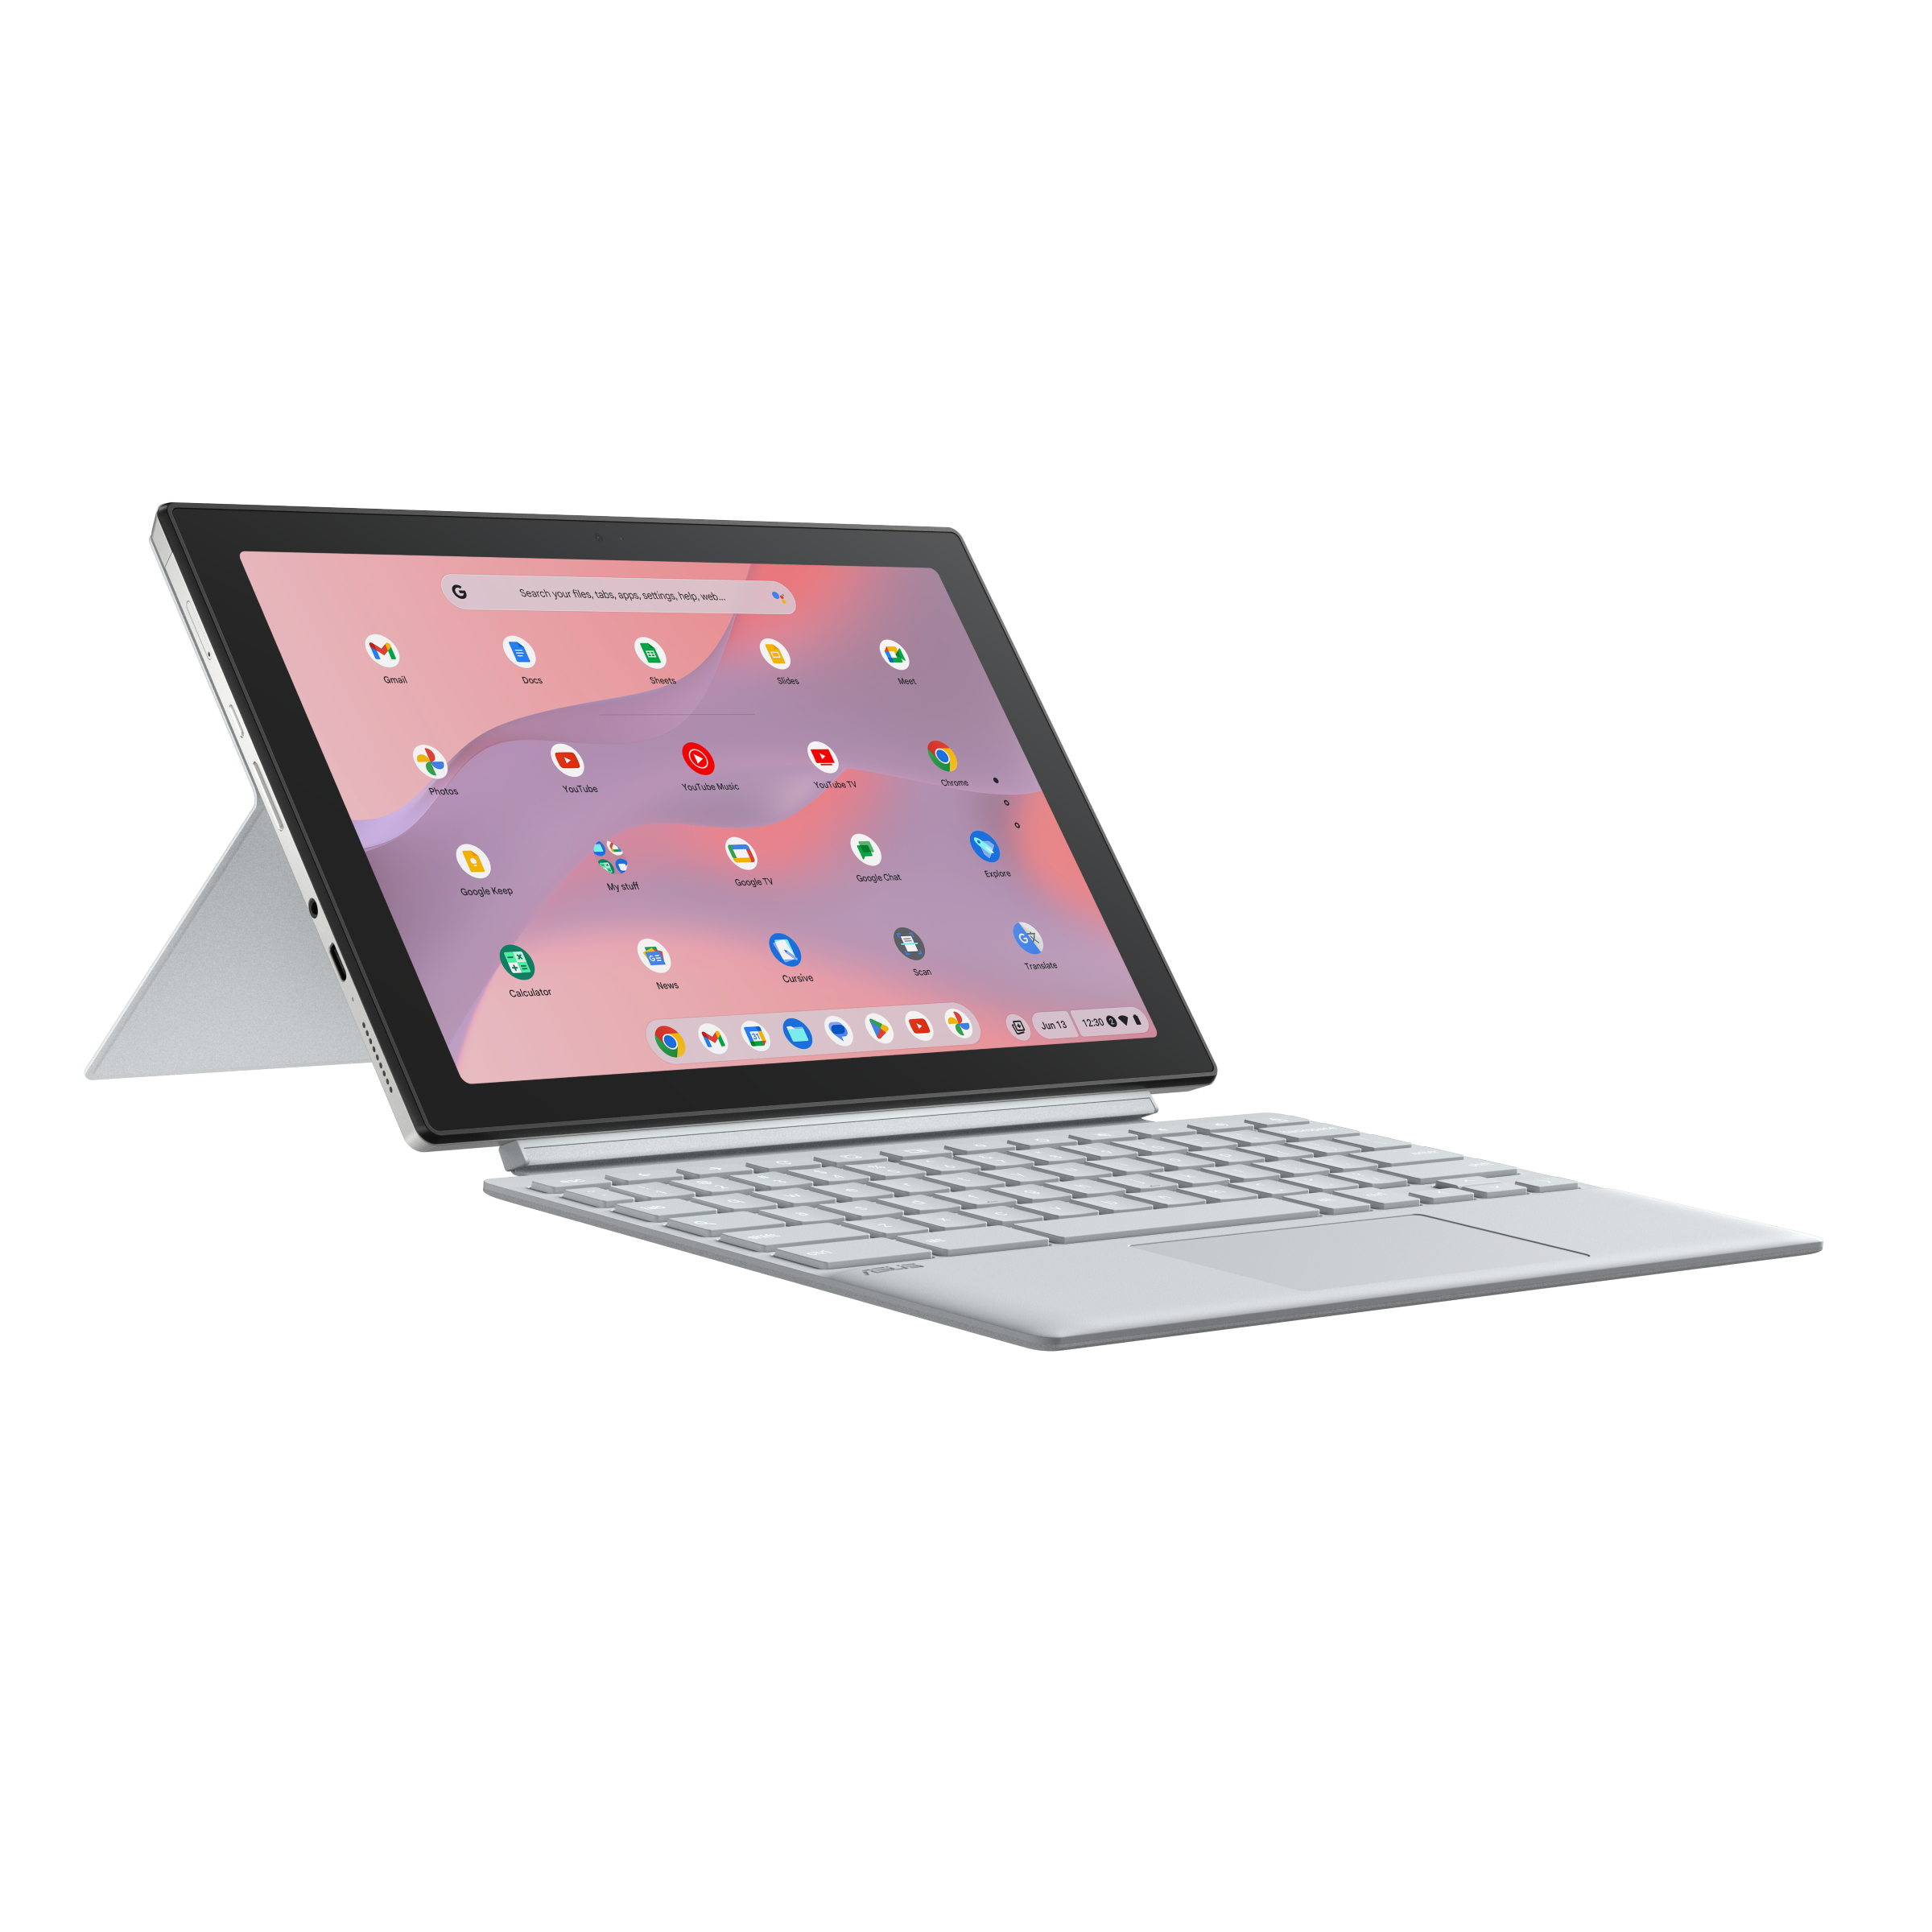 ASUS Chromebook CM30 Detachable (CM3001)｜Laptops For Home｜ASUS USA